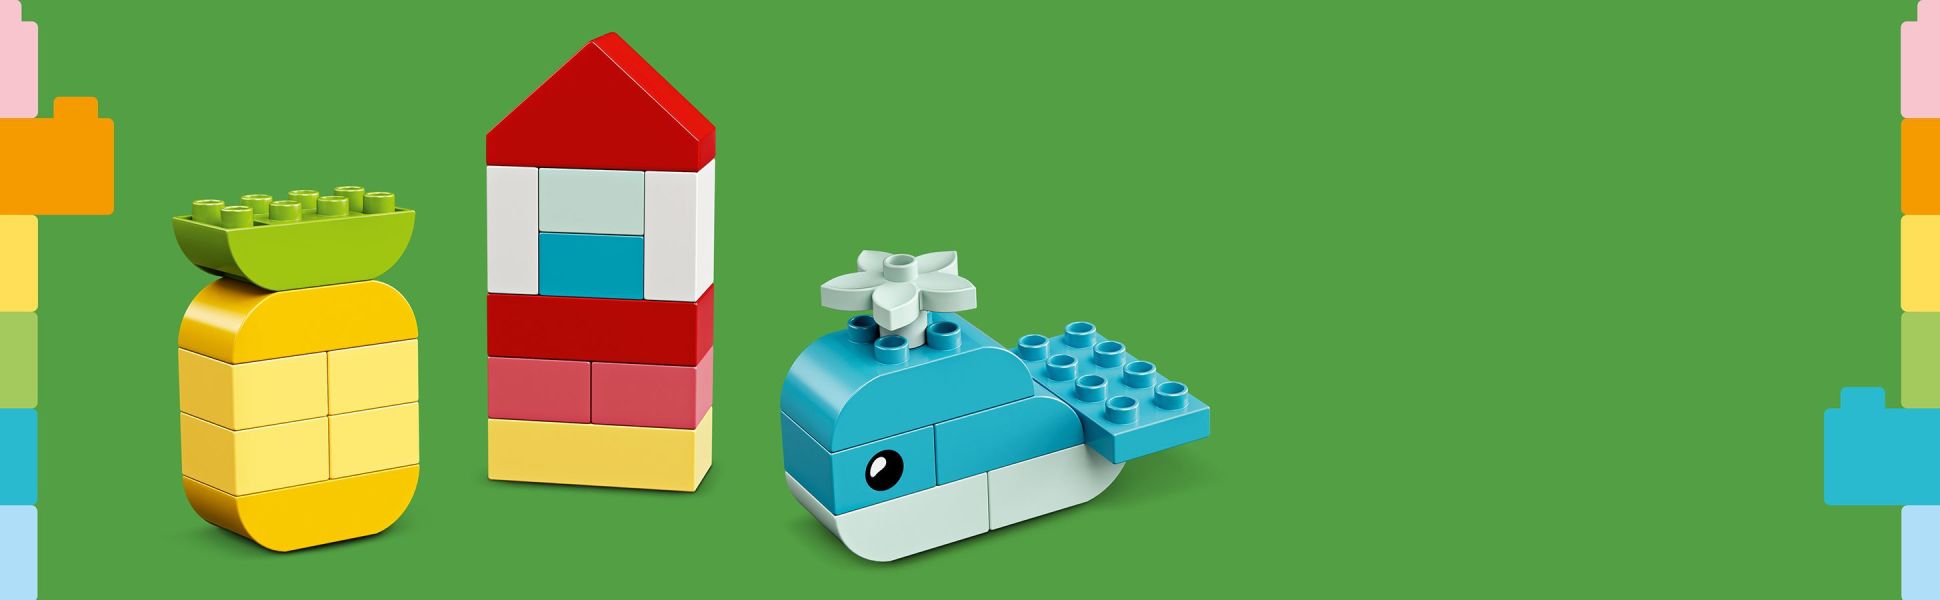 LEGO DUPLO Classic Heart Box, First Bricks Building Toy